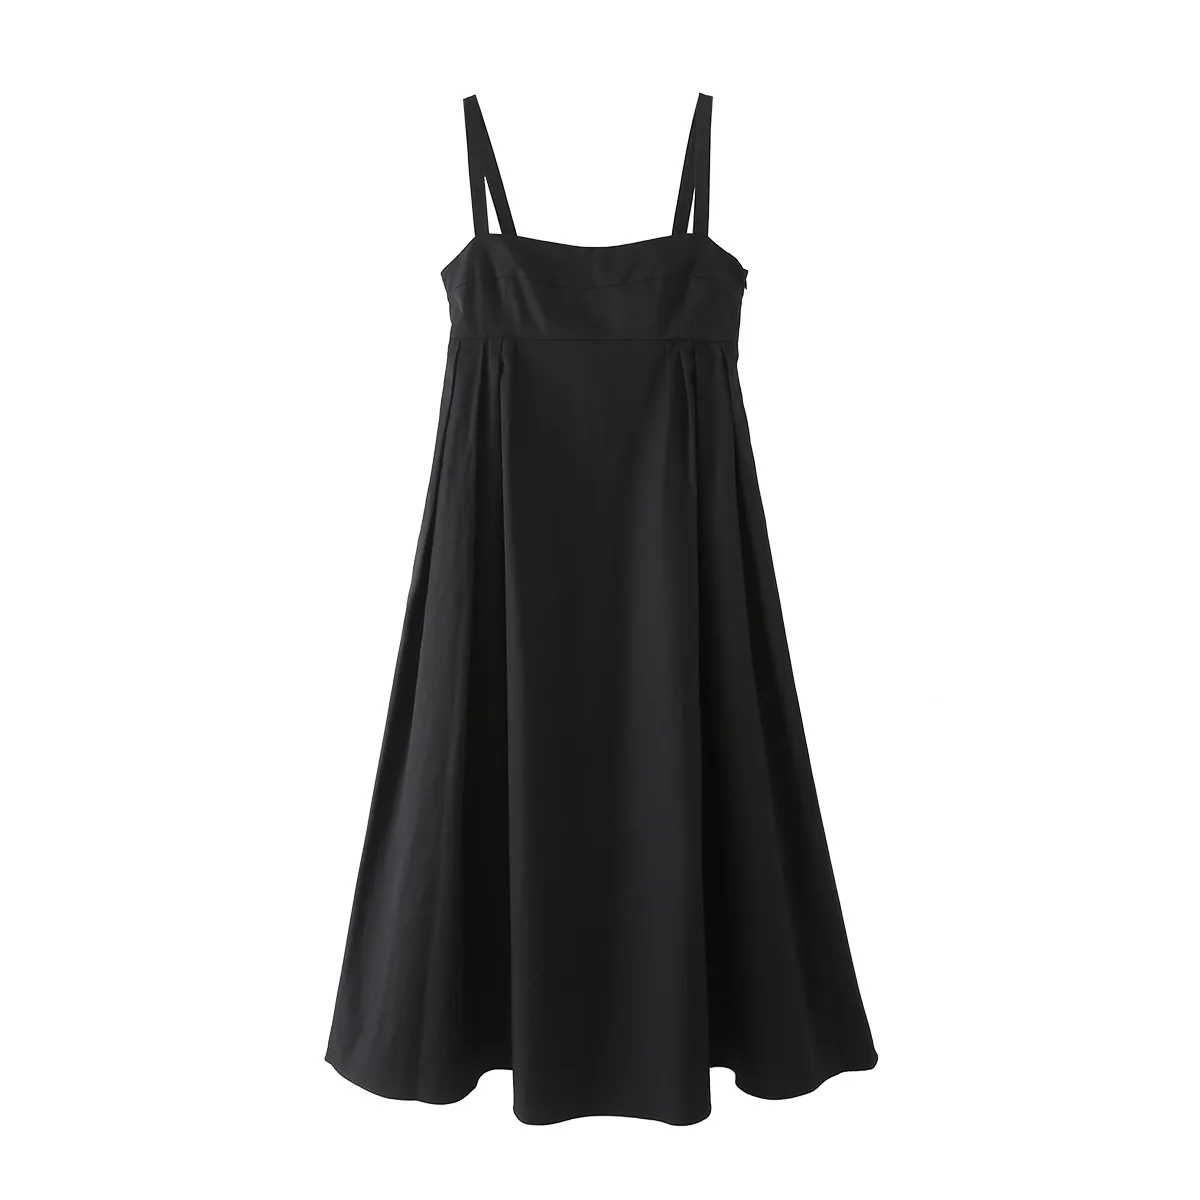 Black color cute design back elastic women summer fashion casual tank top dresses